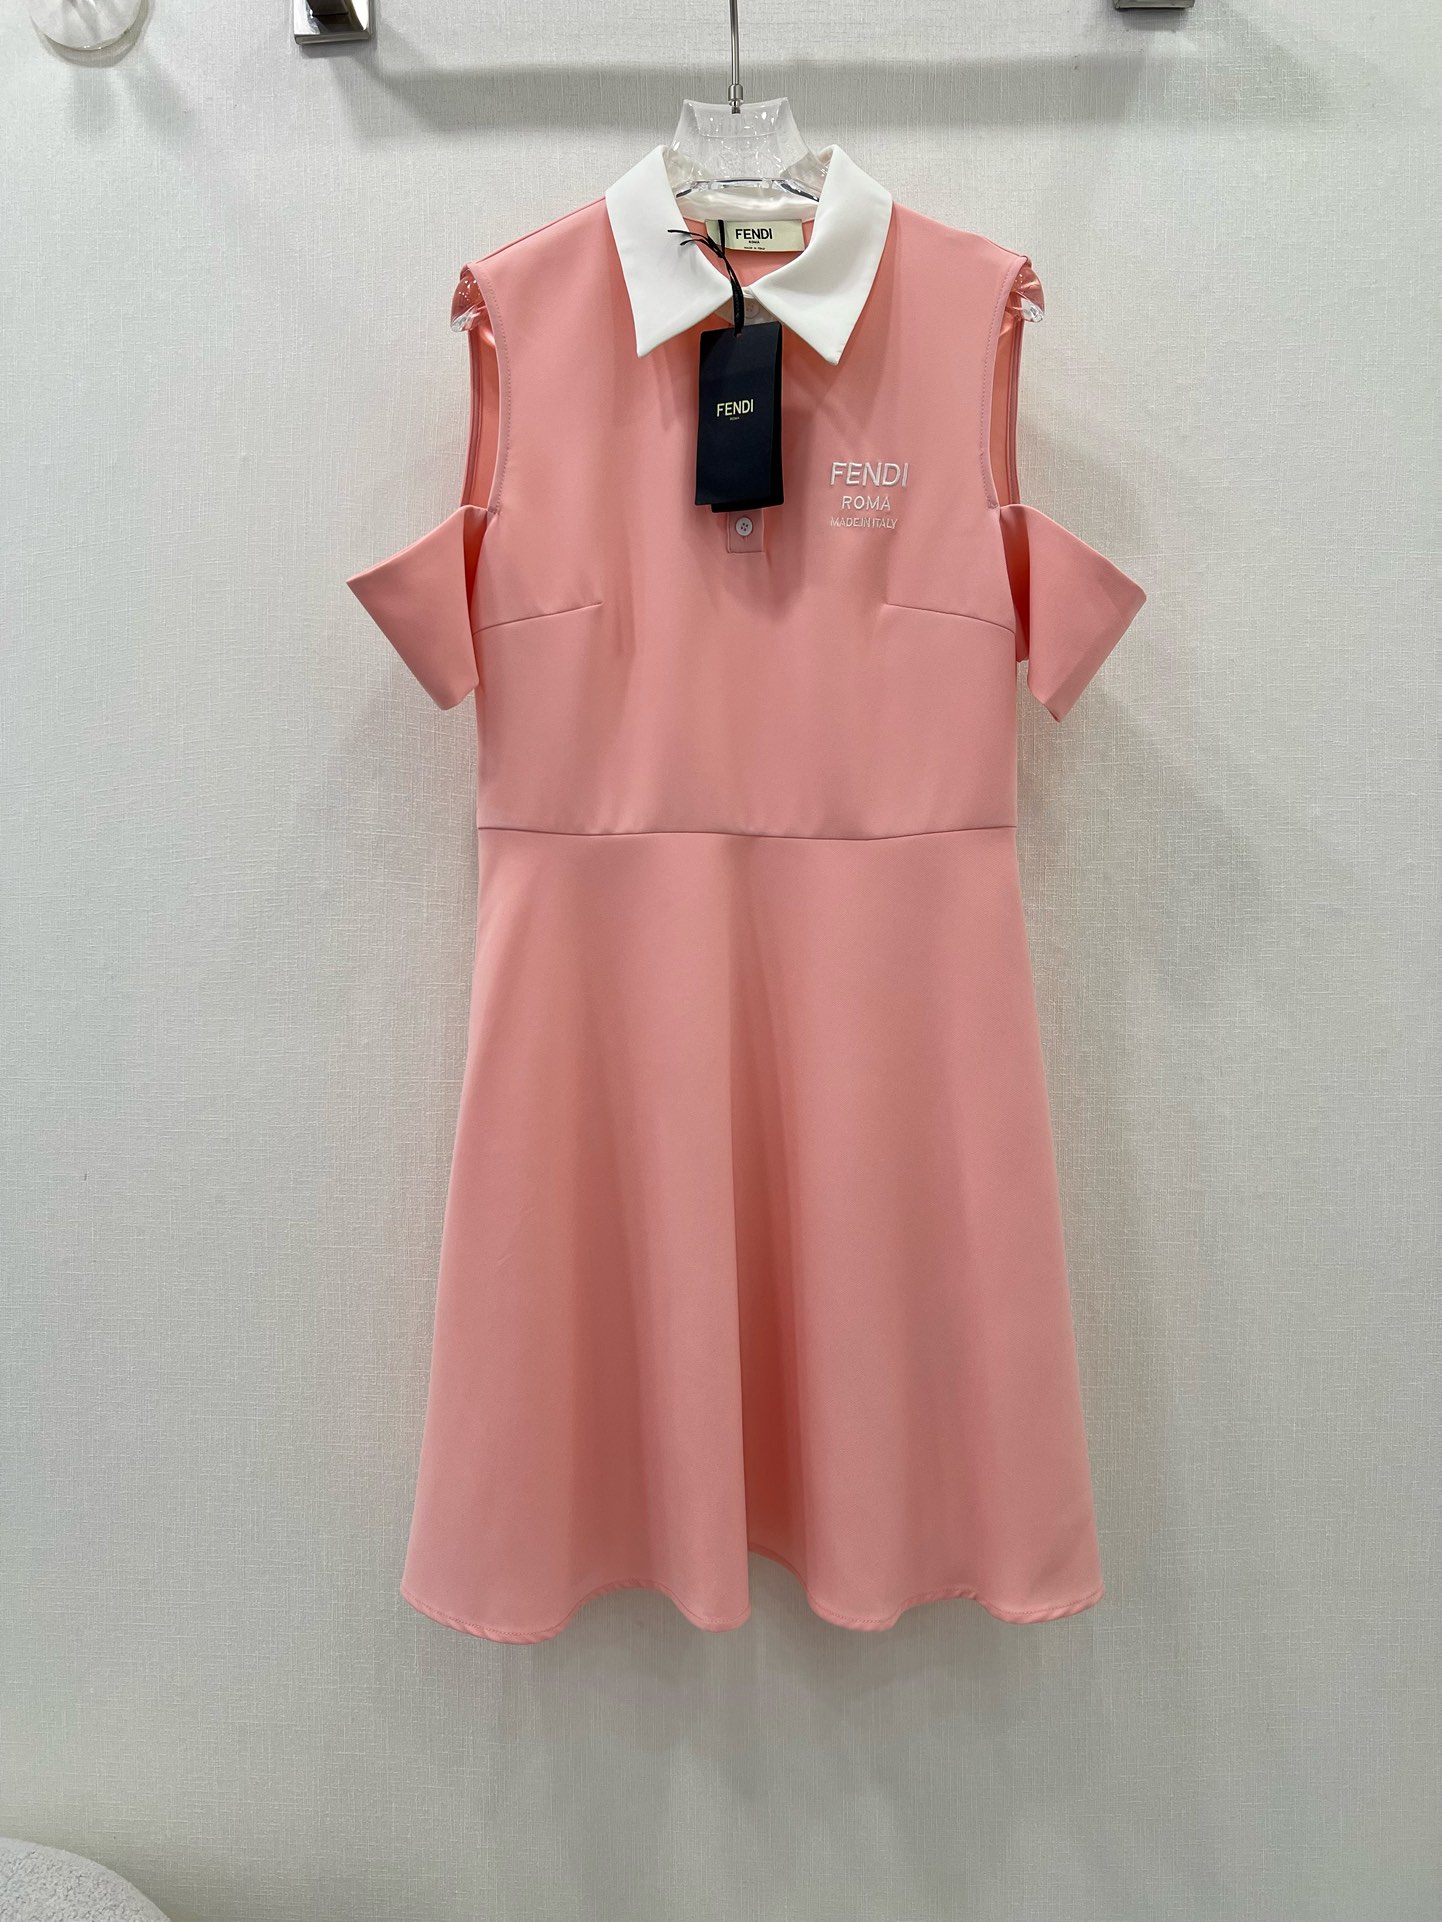 fendi キッズ ワンピーススーパーコピー 魅力的なスタイル スカート セクシー 優雅 高級品 ピンク_1